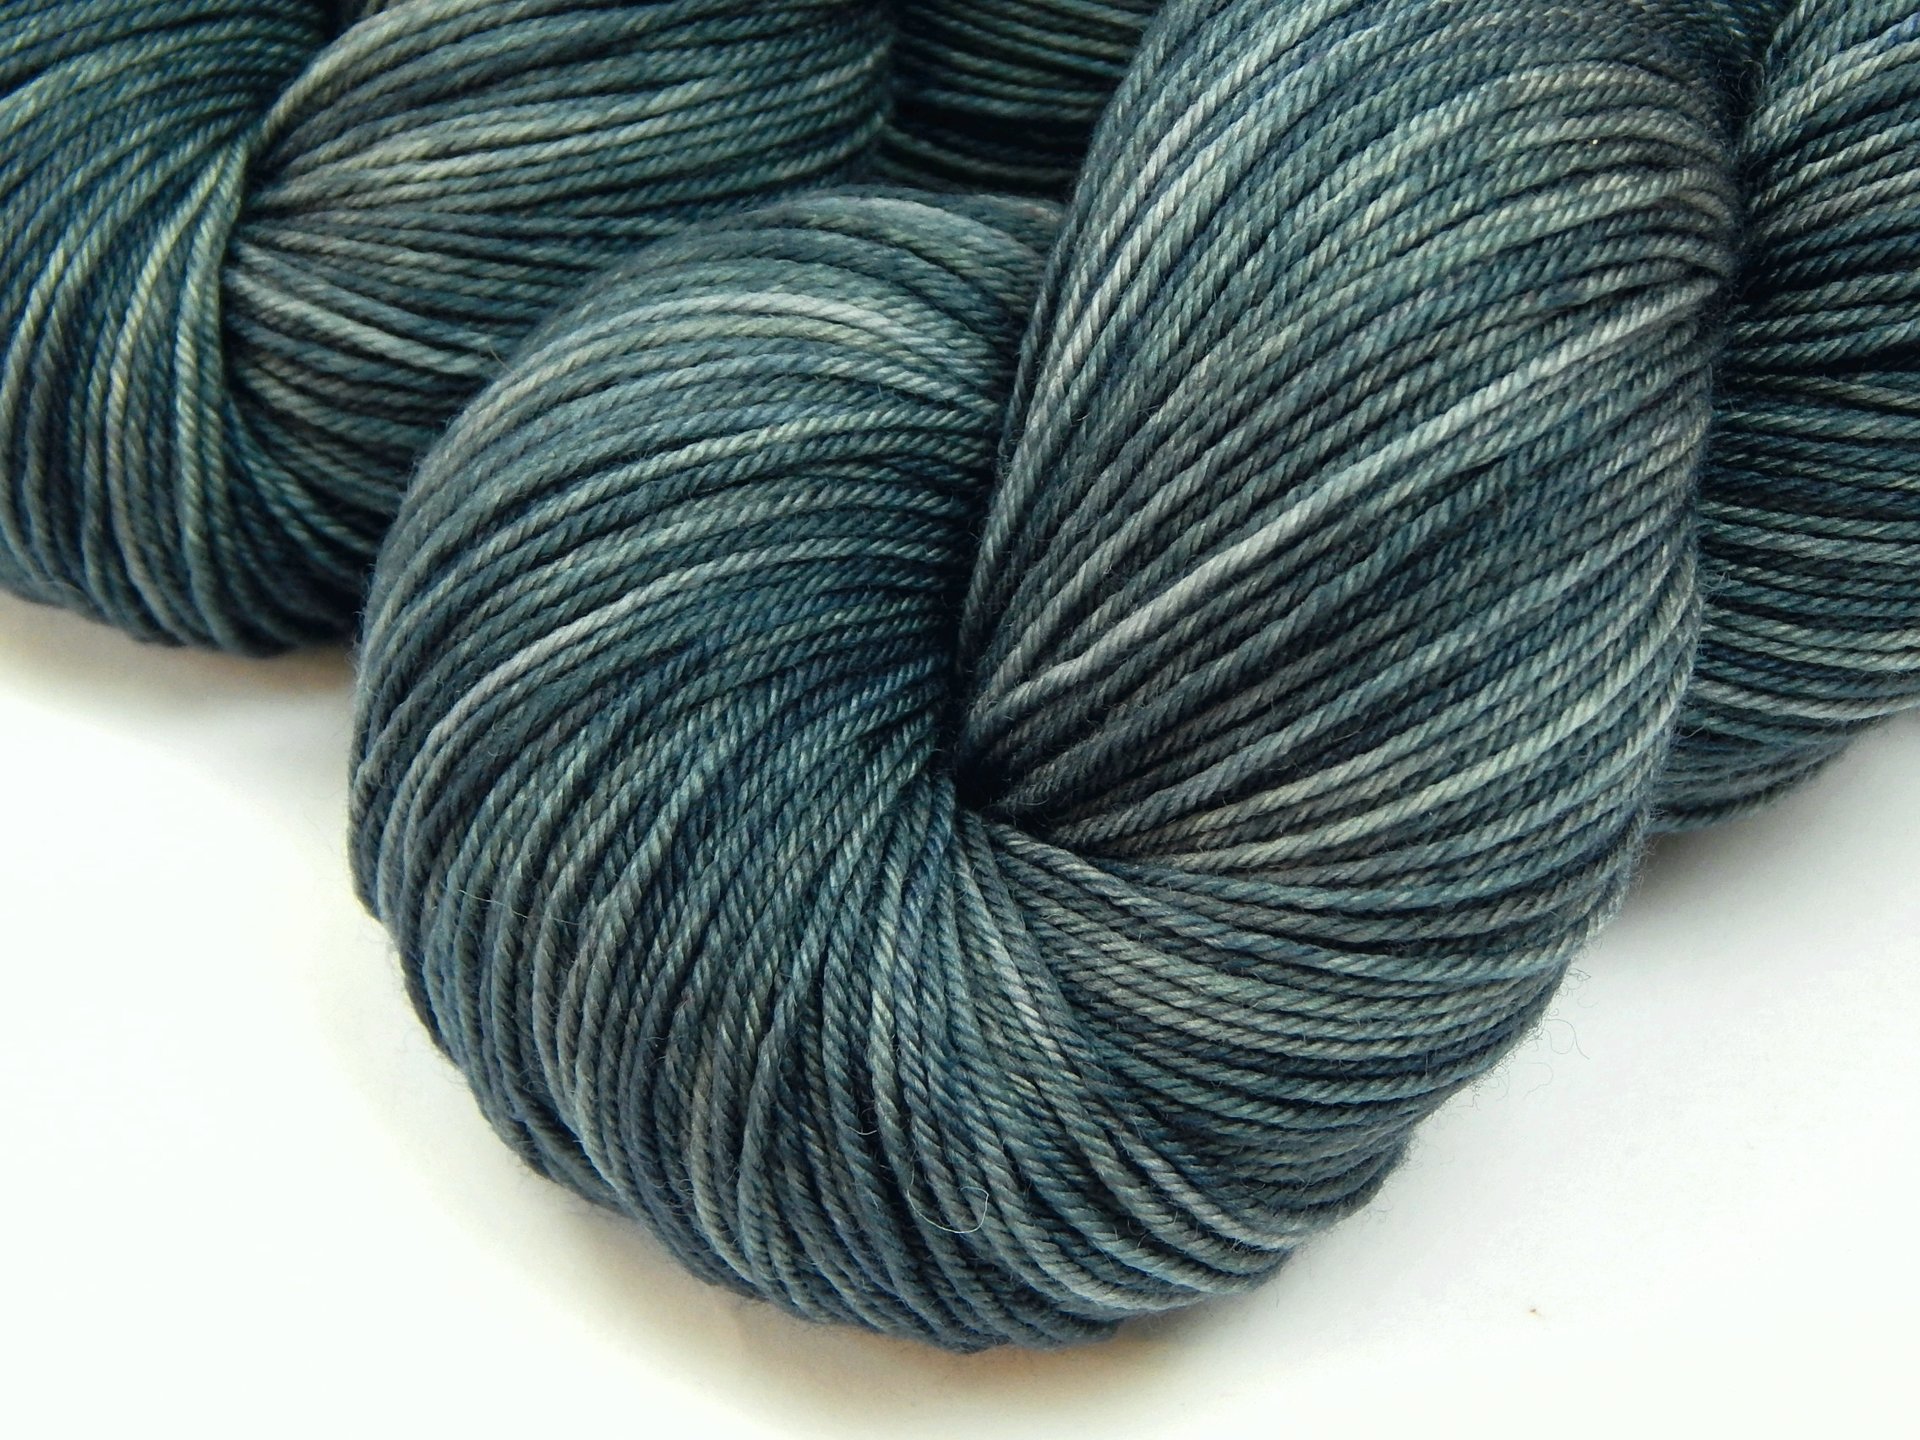 Hand Dyed Yarn, Sock Fingering Weight 4 Ply 100% Superwash Merino Wool - Denim - Indie Dyer Knitting Yarn, Slate Blue Tonal Semi Solid Yarn